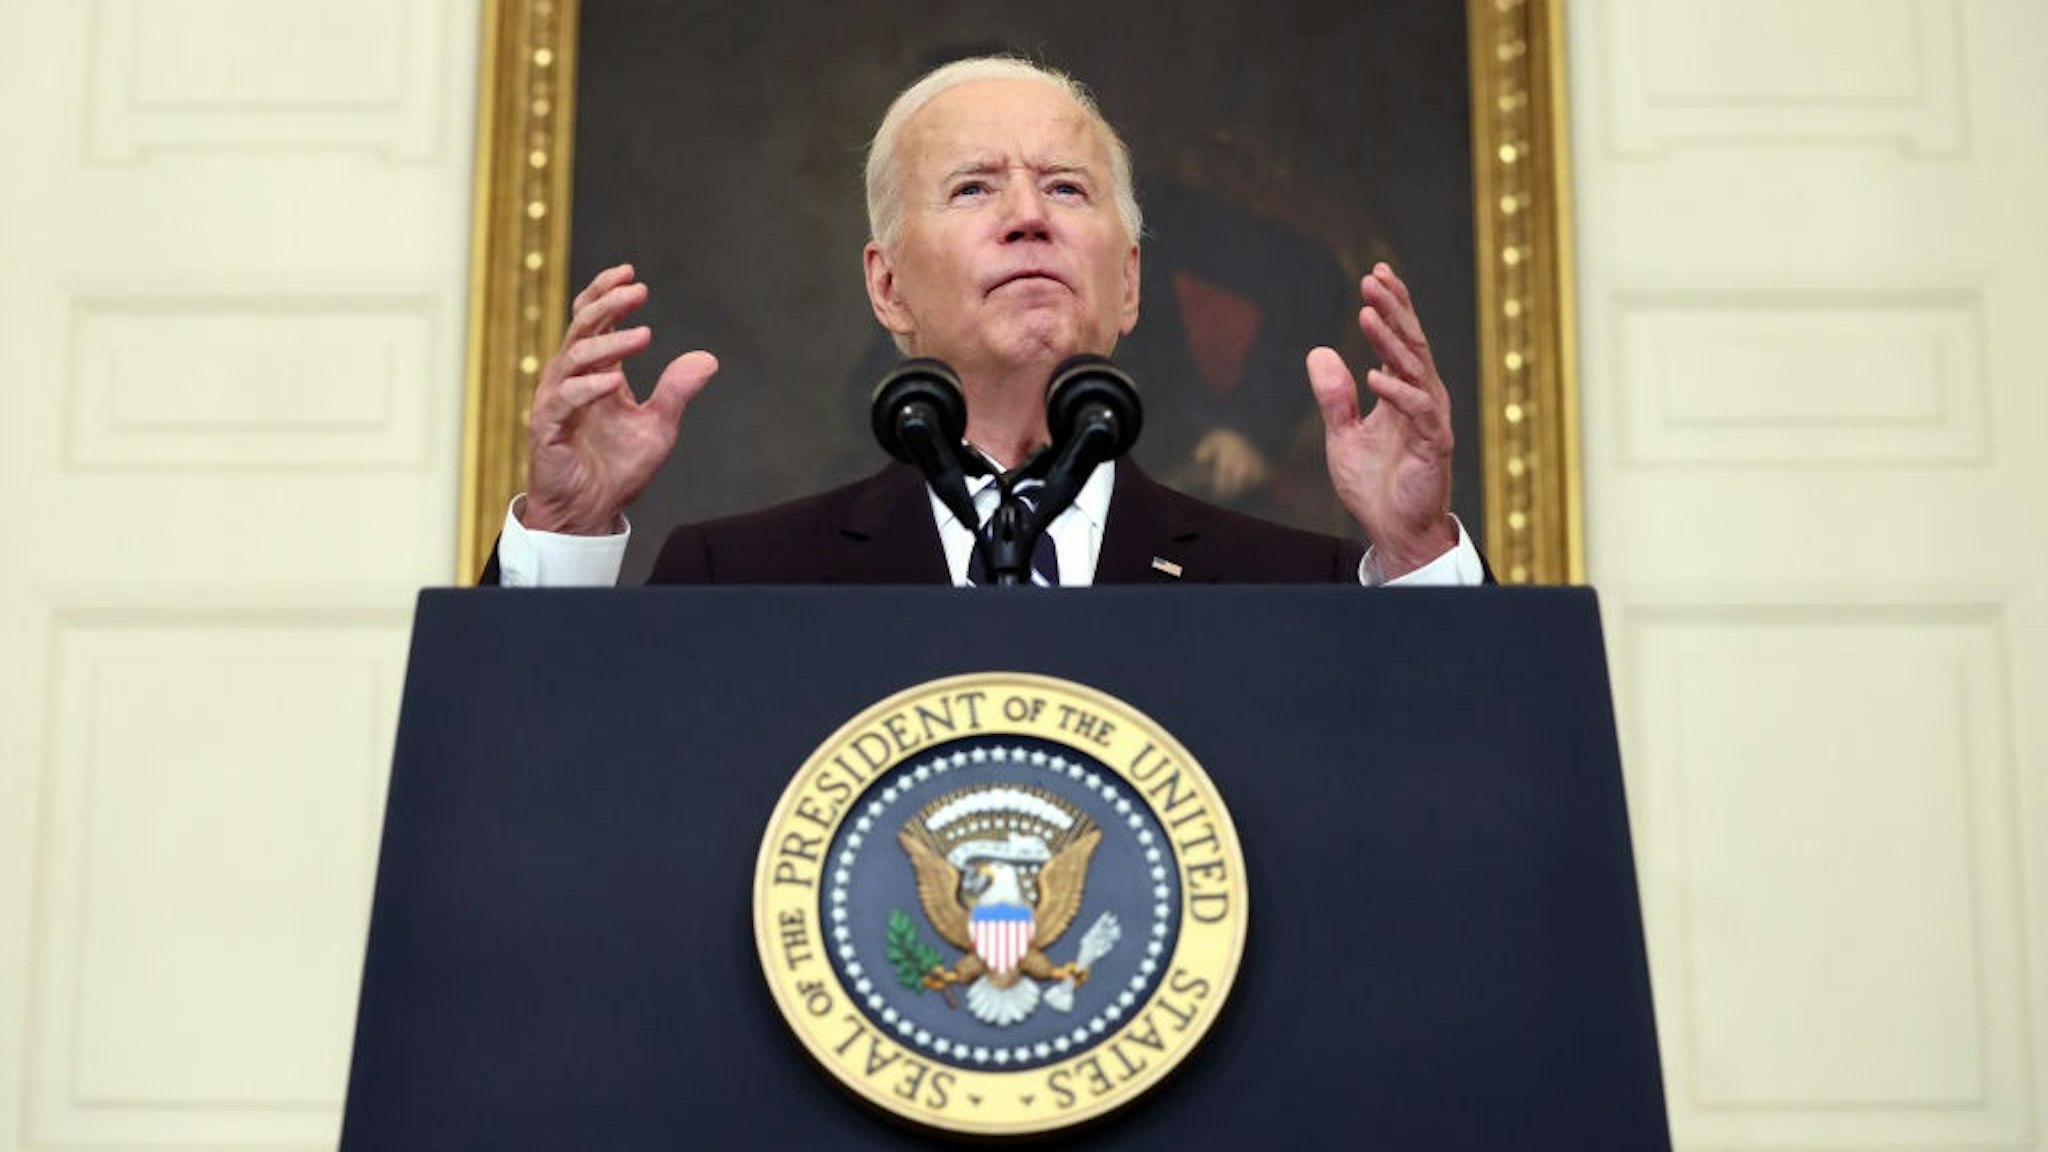 WASHINGTON, DC - SEPTEMBER 09: U.S. President Joe Biden speaks about combatting the coronavirus pandemic in the State Dining Room of the White House on September 9, 2021 in Washington, DC.